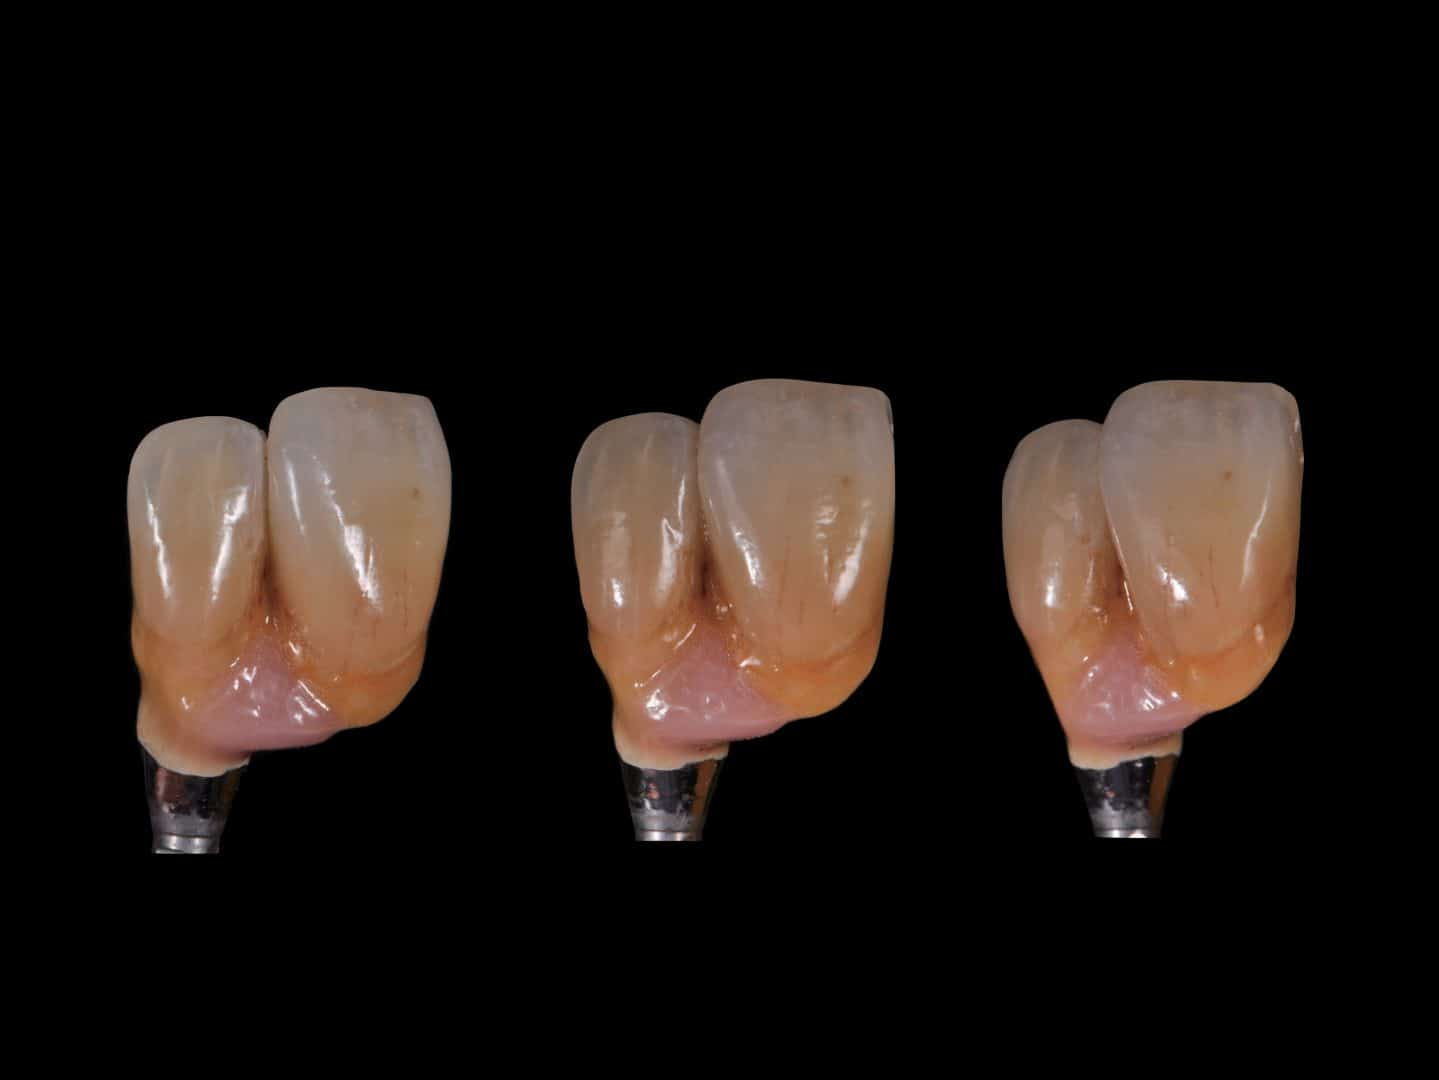 digital dental implants dentist christchurch boutique dental